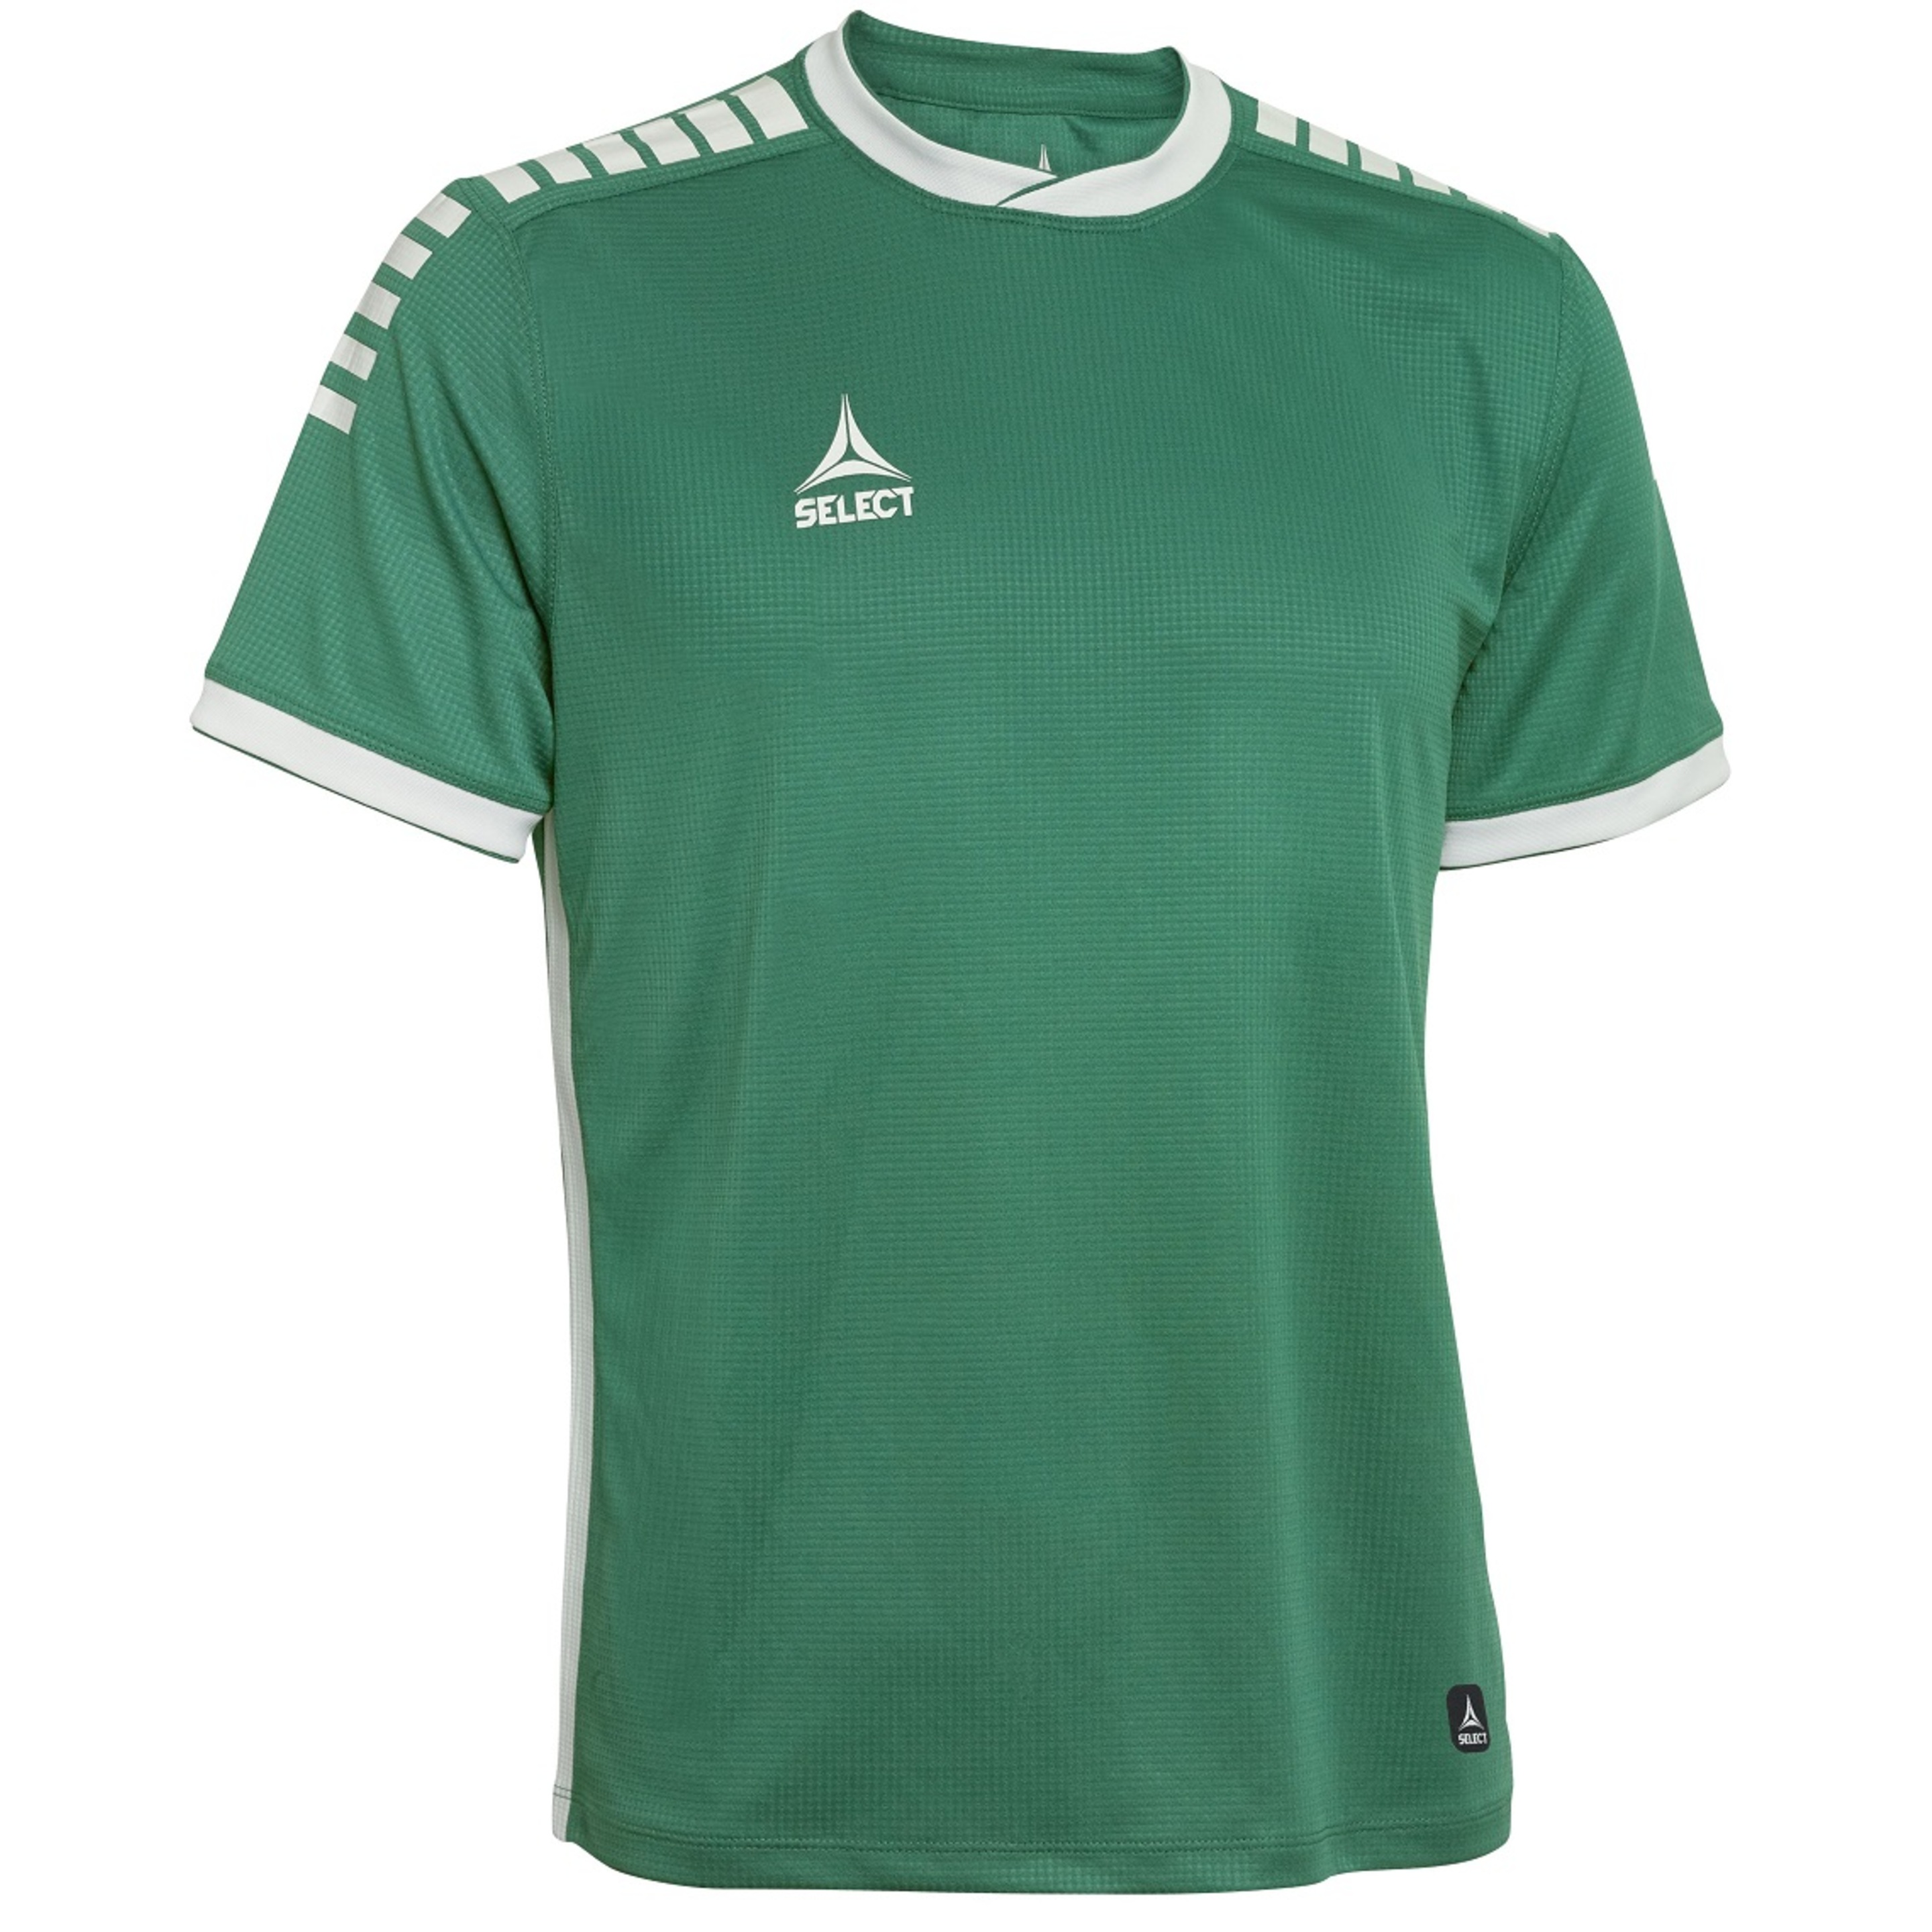 Camiseta Mónaco Select - verde - 